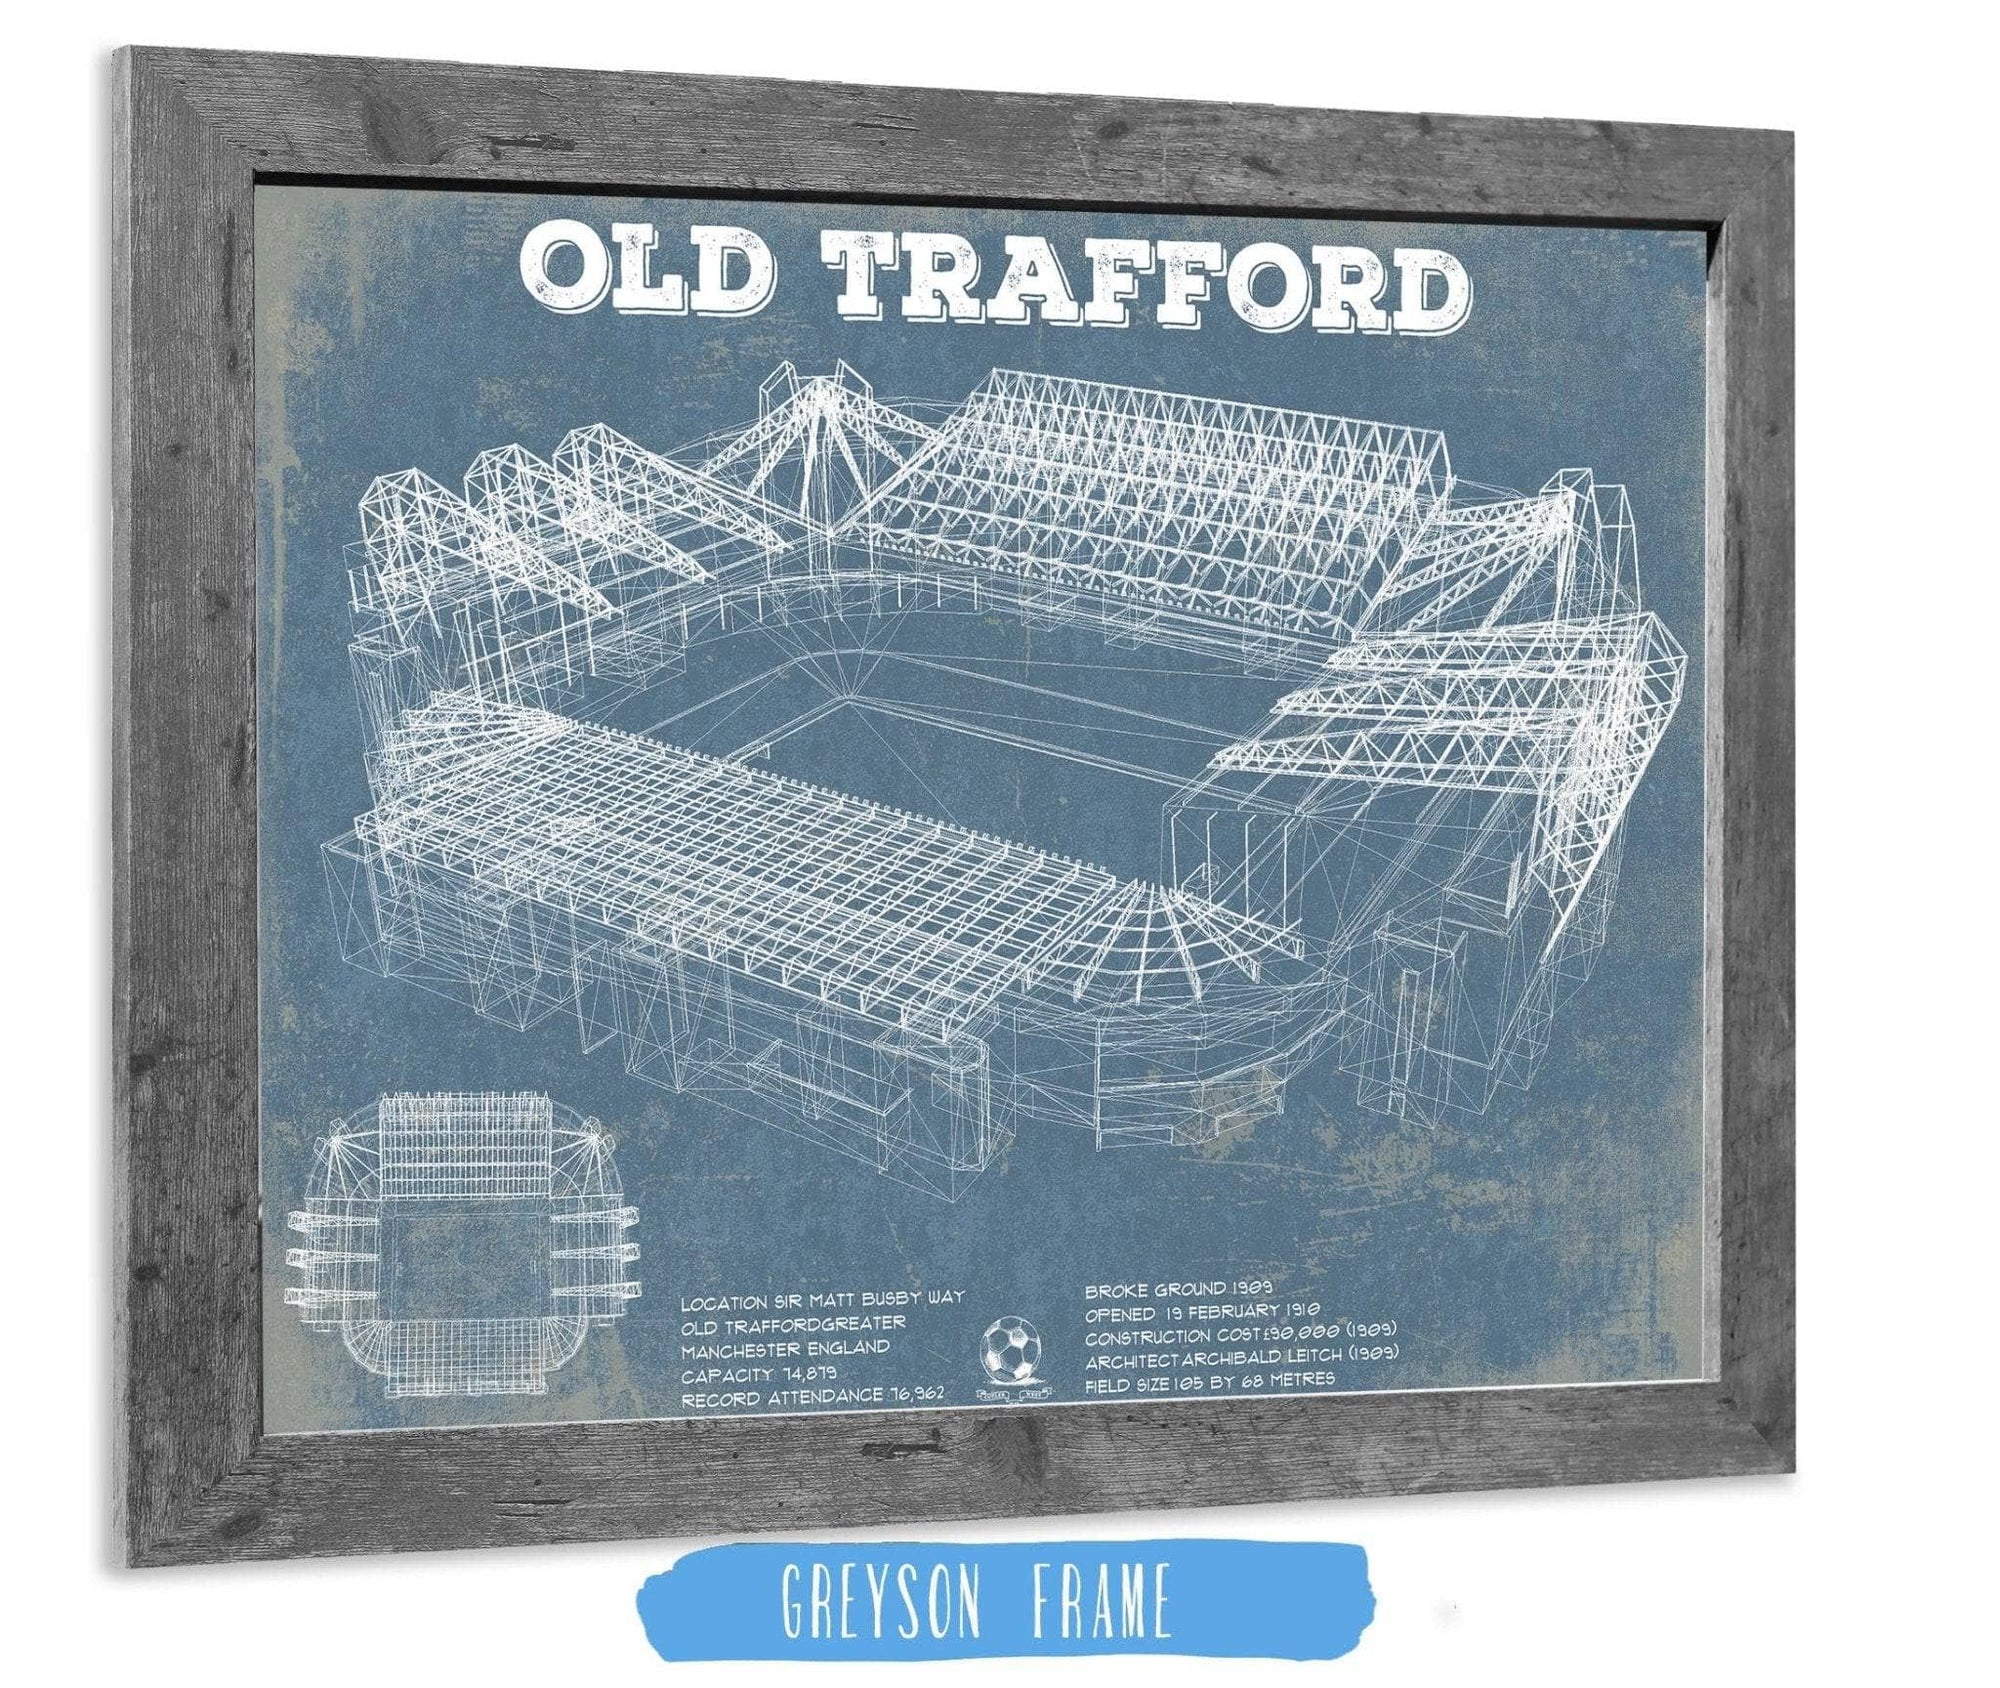 Cutler West Soccer Collection 14" x 11" / Greyson Frame Manchester United F.C. - Old Trafford Stadium Blueprint Vintage Soccer Print 692373685-TOP